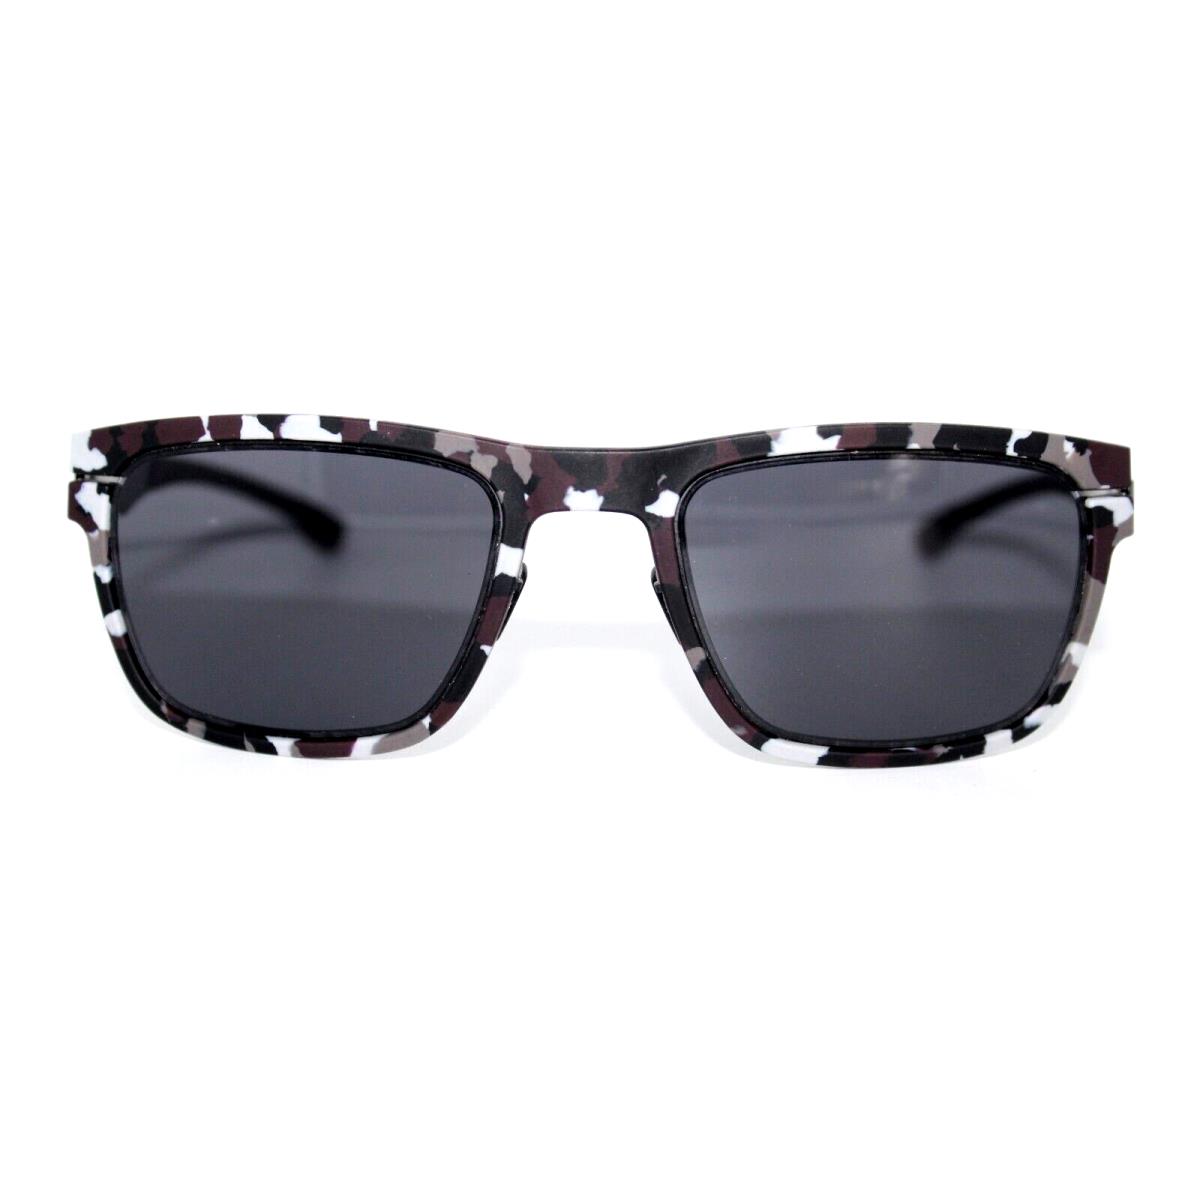 ic! berlin sunglasses  - Black Frame, Black Lens